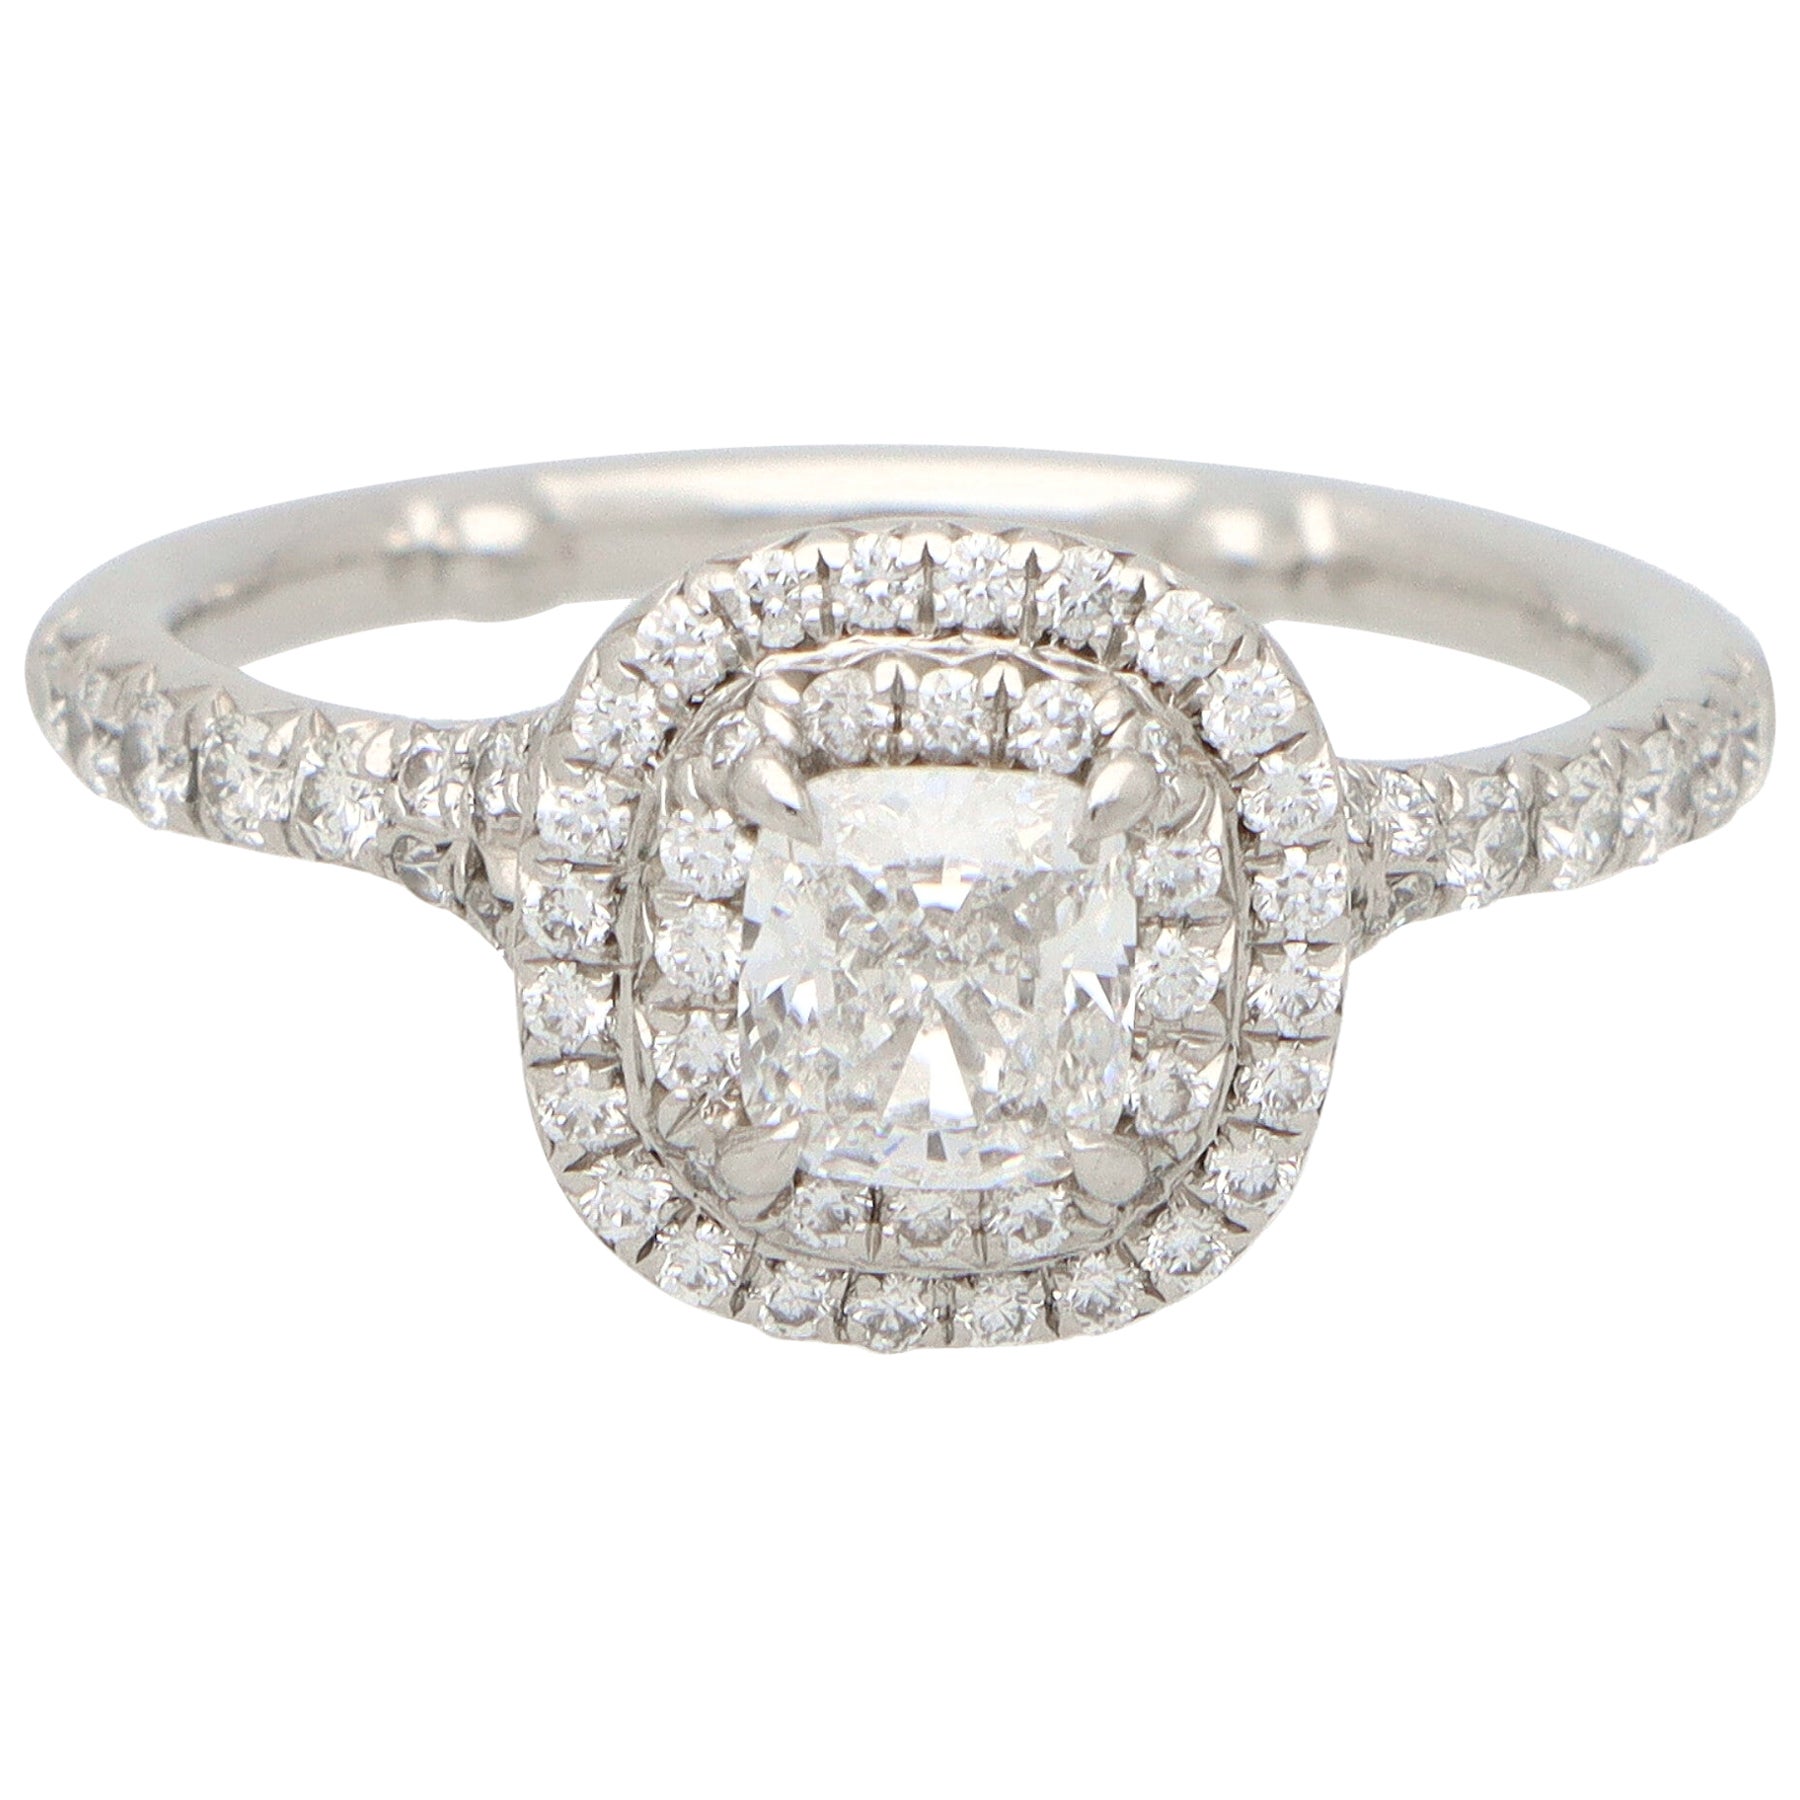 Vintage Tiffany & Co. Soleste Cushion Cut Diamond Halo Ring Set in Platinum